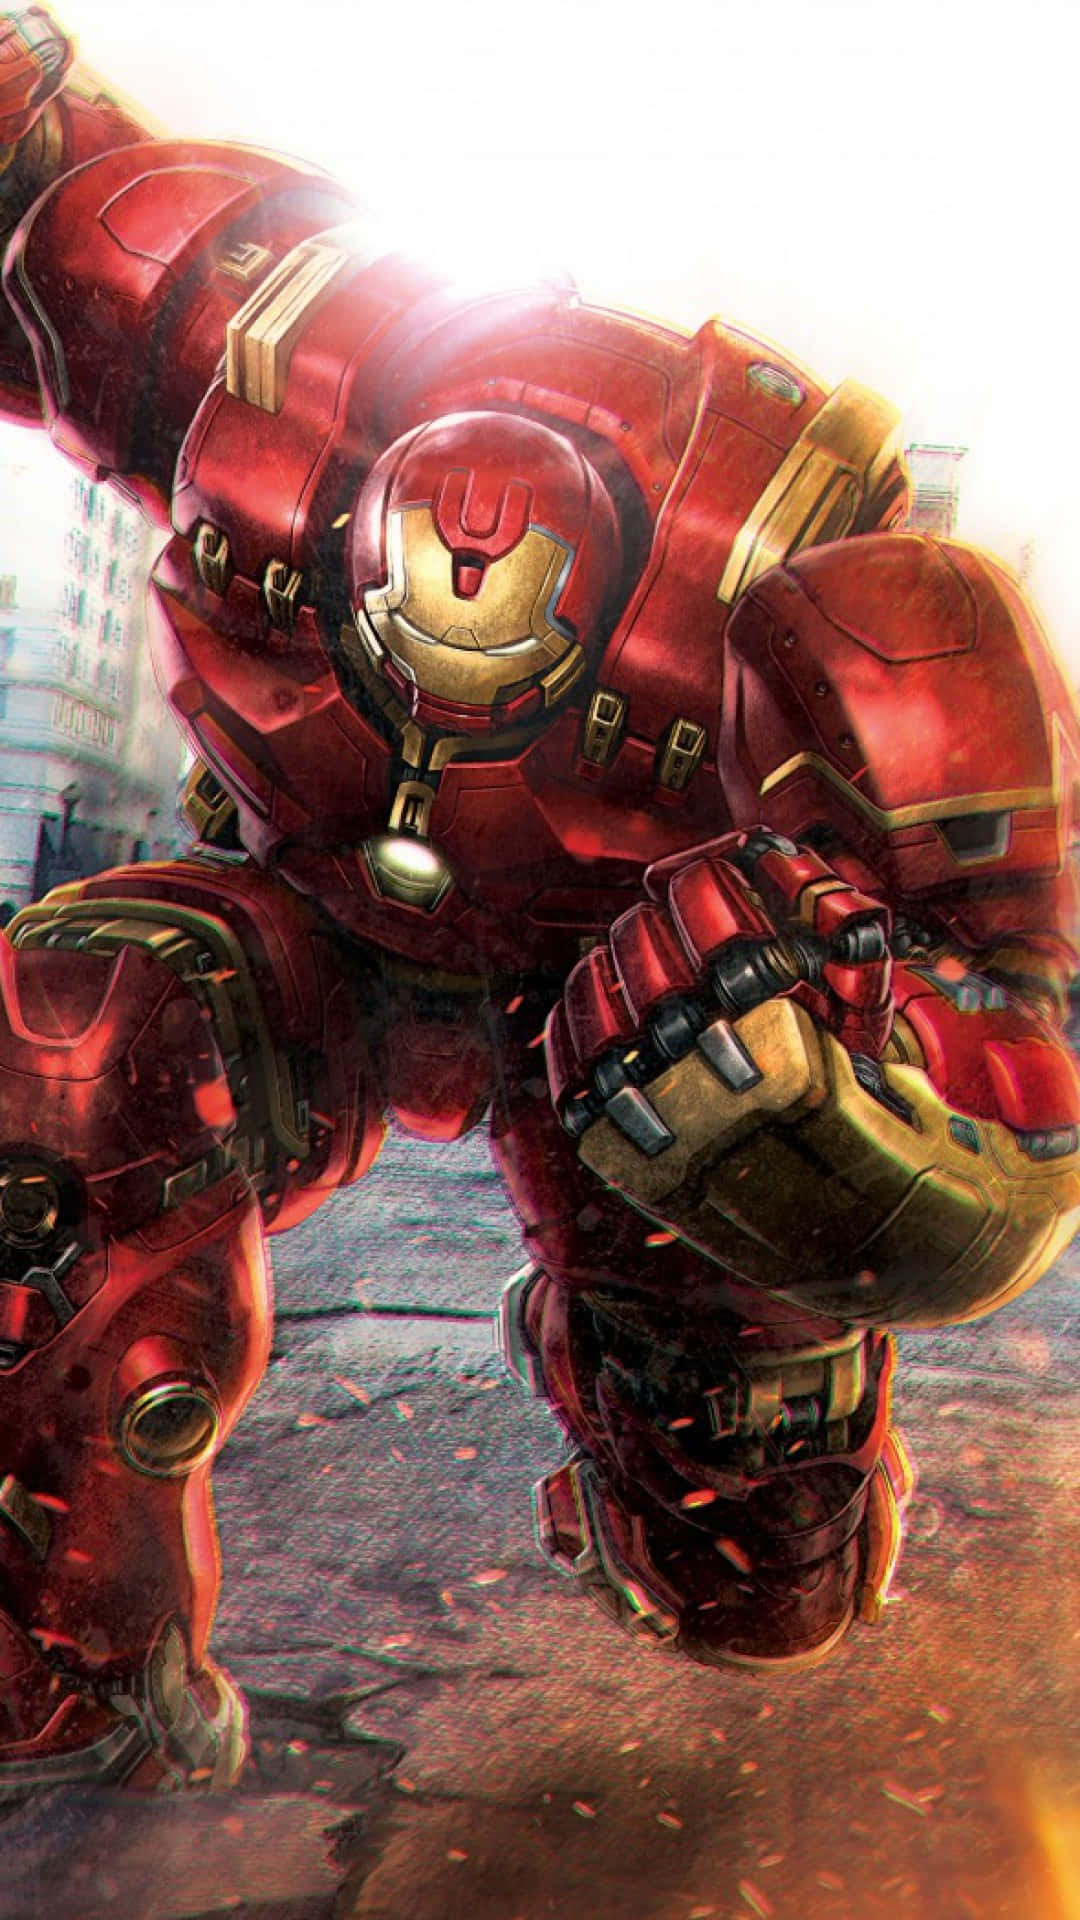 Wallpaper!befria Den Inre Marvel-fantasten I Dig Med Cool Iron Man-iphone-bakgrundsbild! Wallpaper